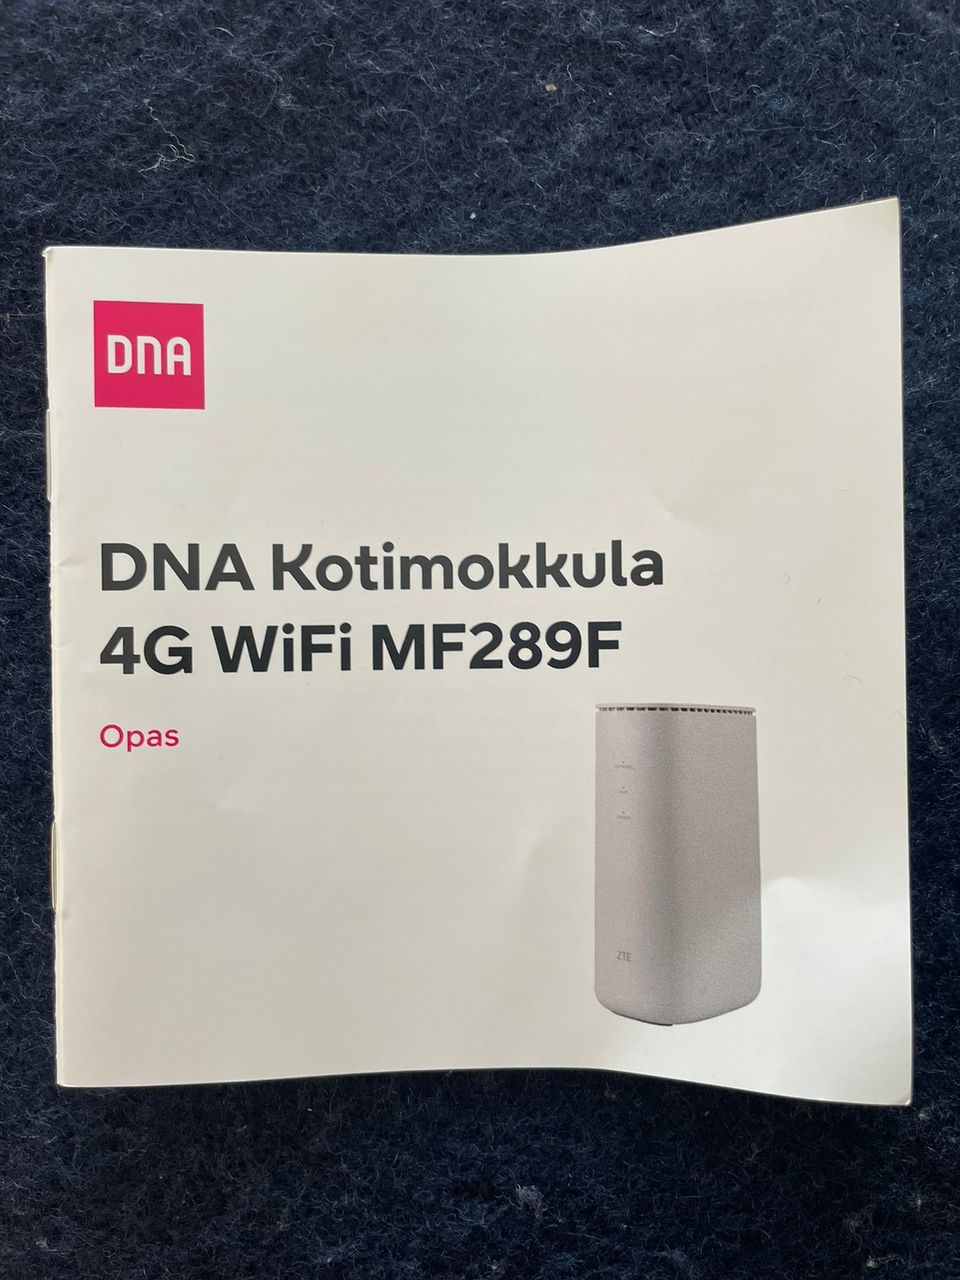 DNA Kotimokkula 4G WiFi MF289F